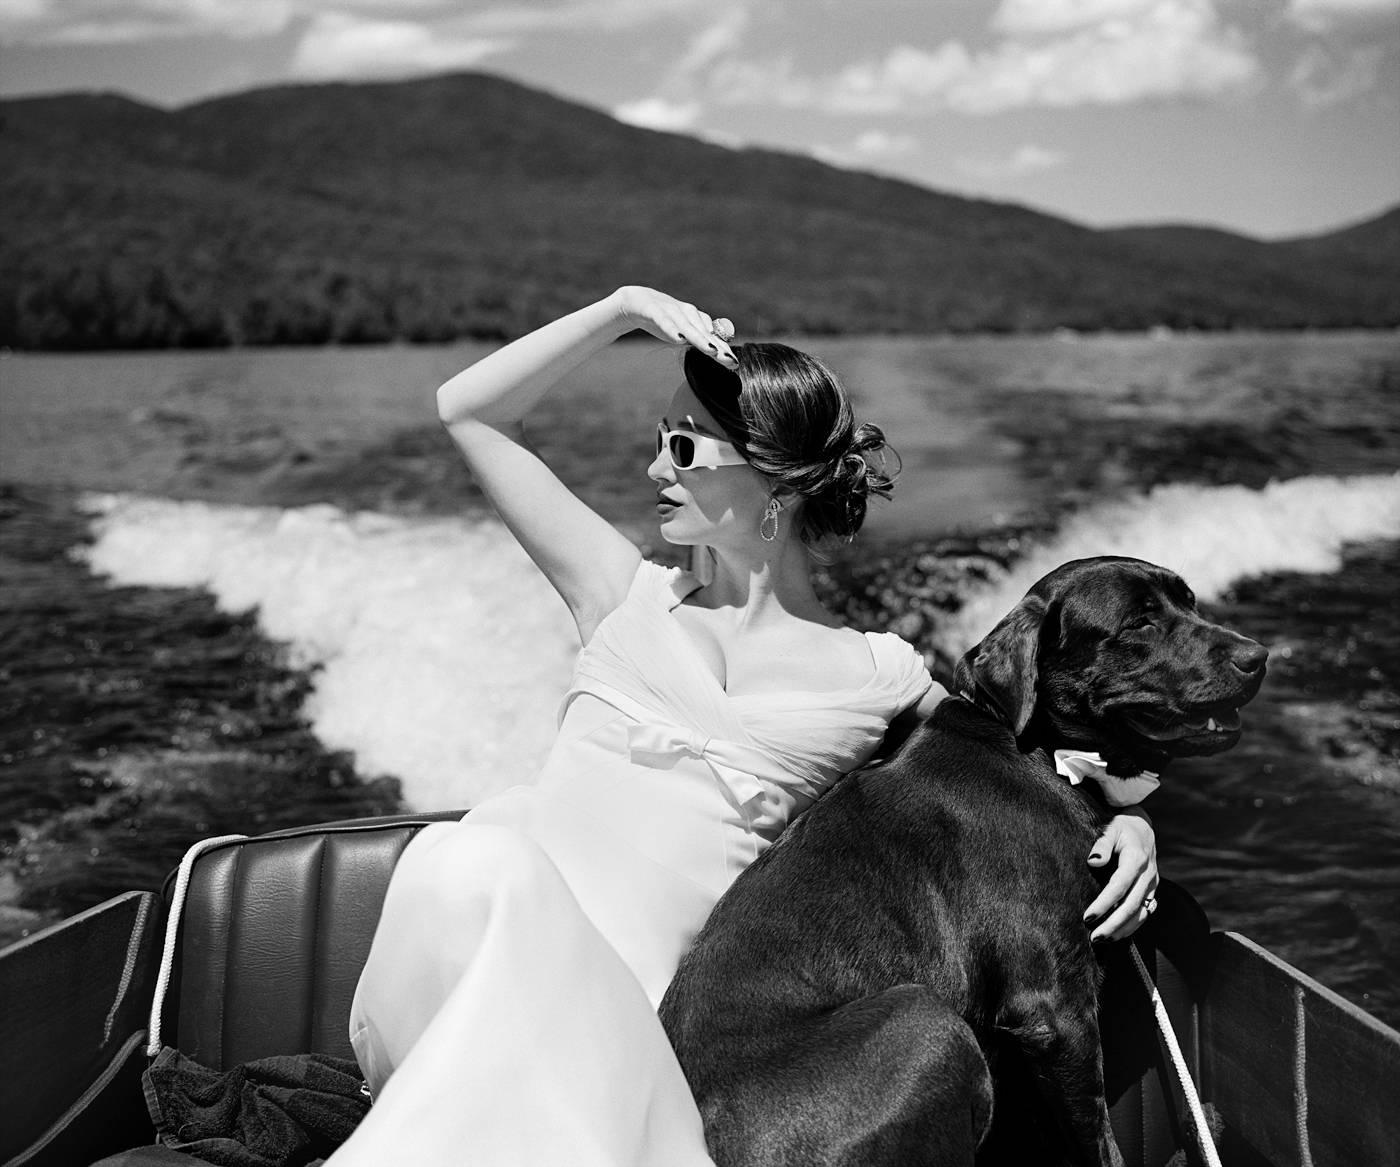 Rodney Smith Black and White Photograph - Marina and Dog in Boat, Lake Placid, NY